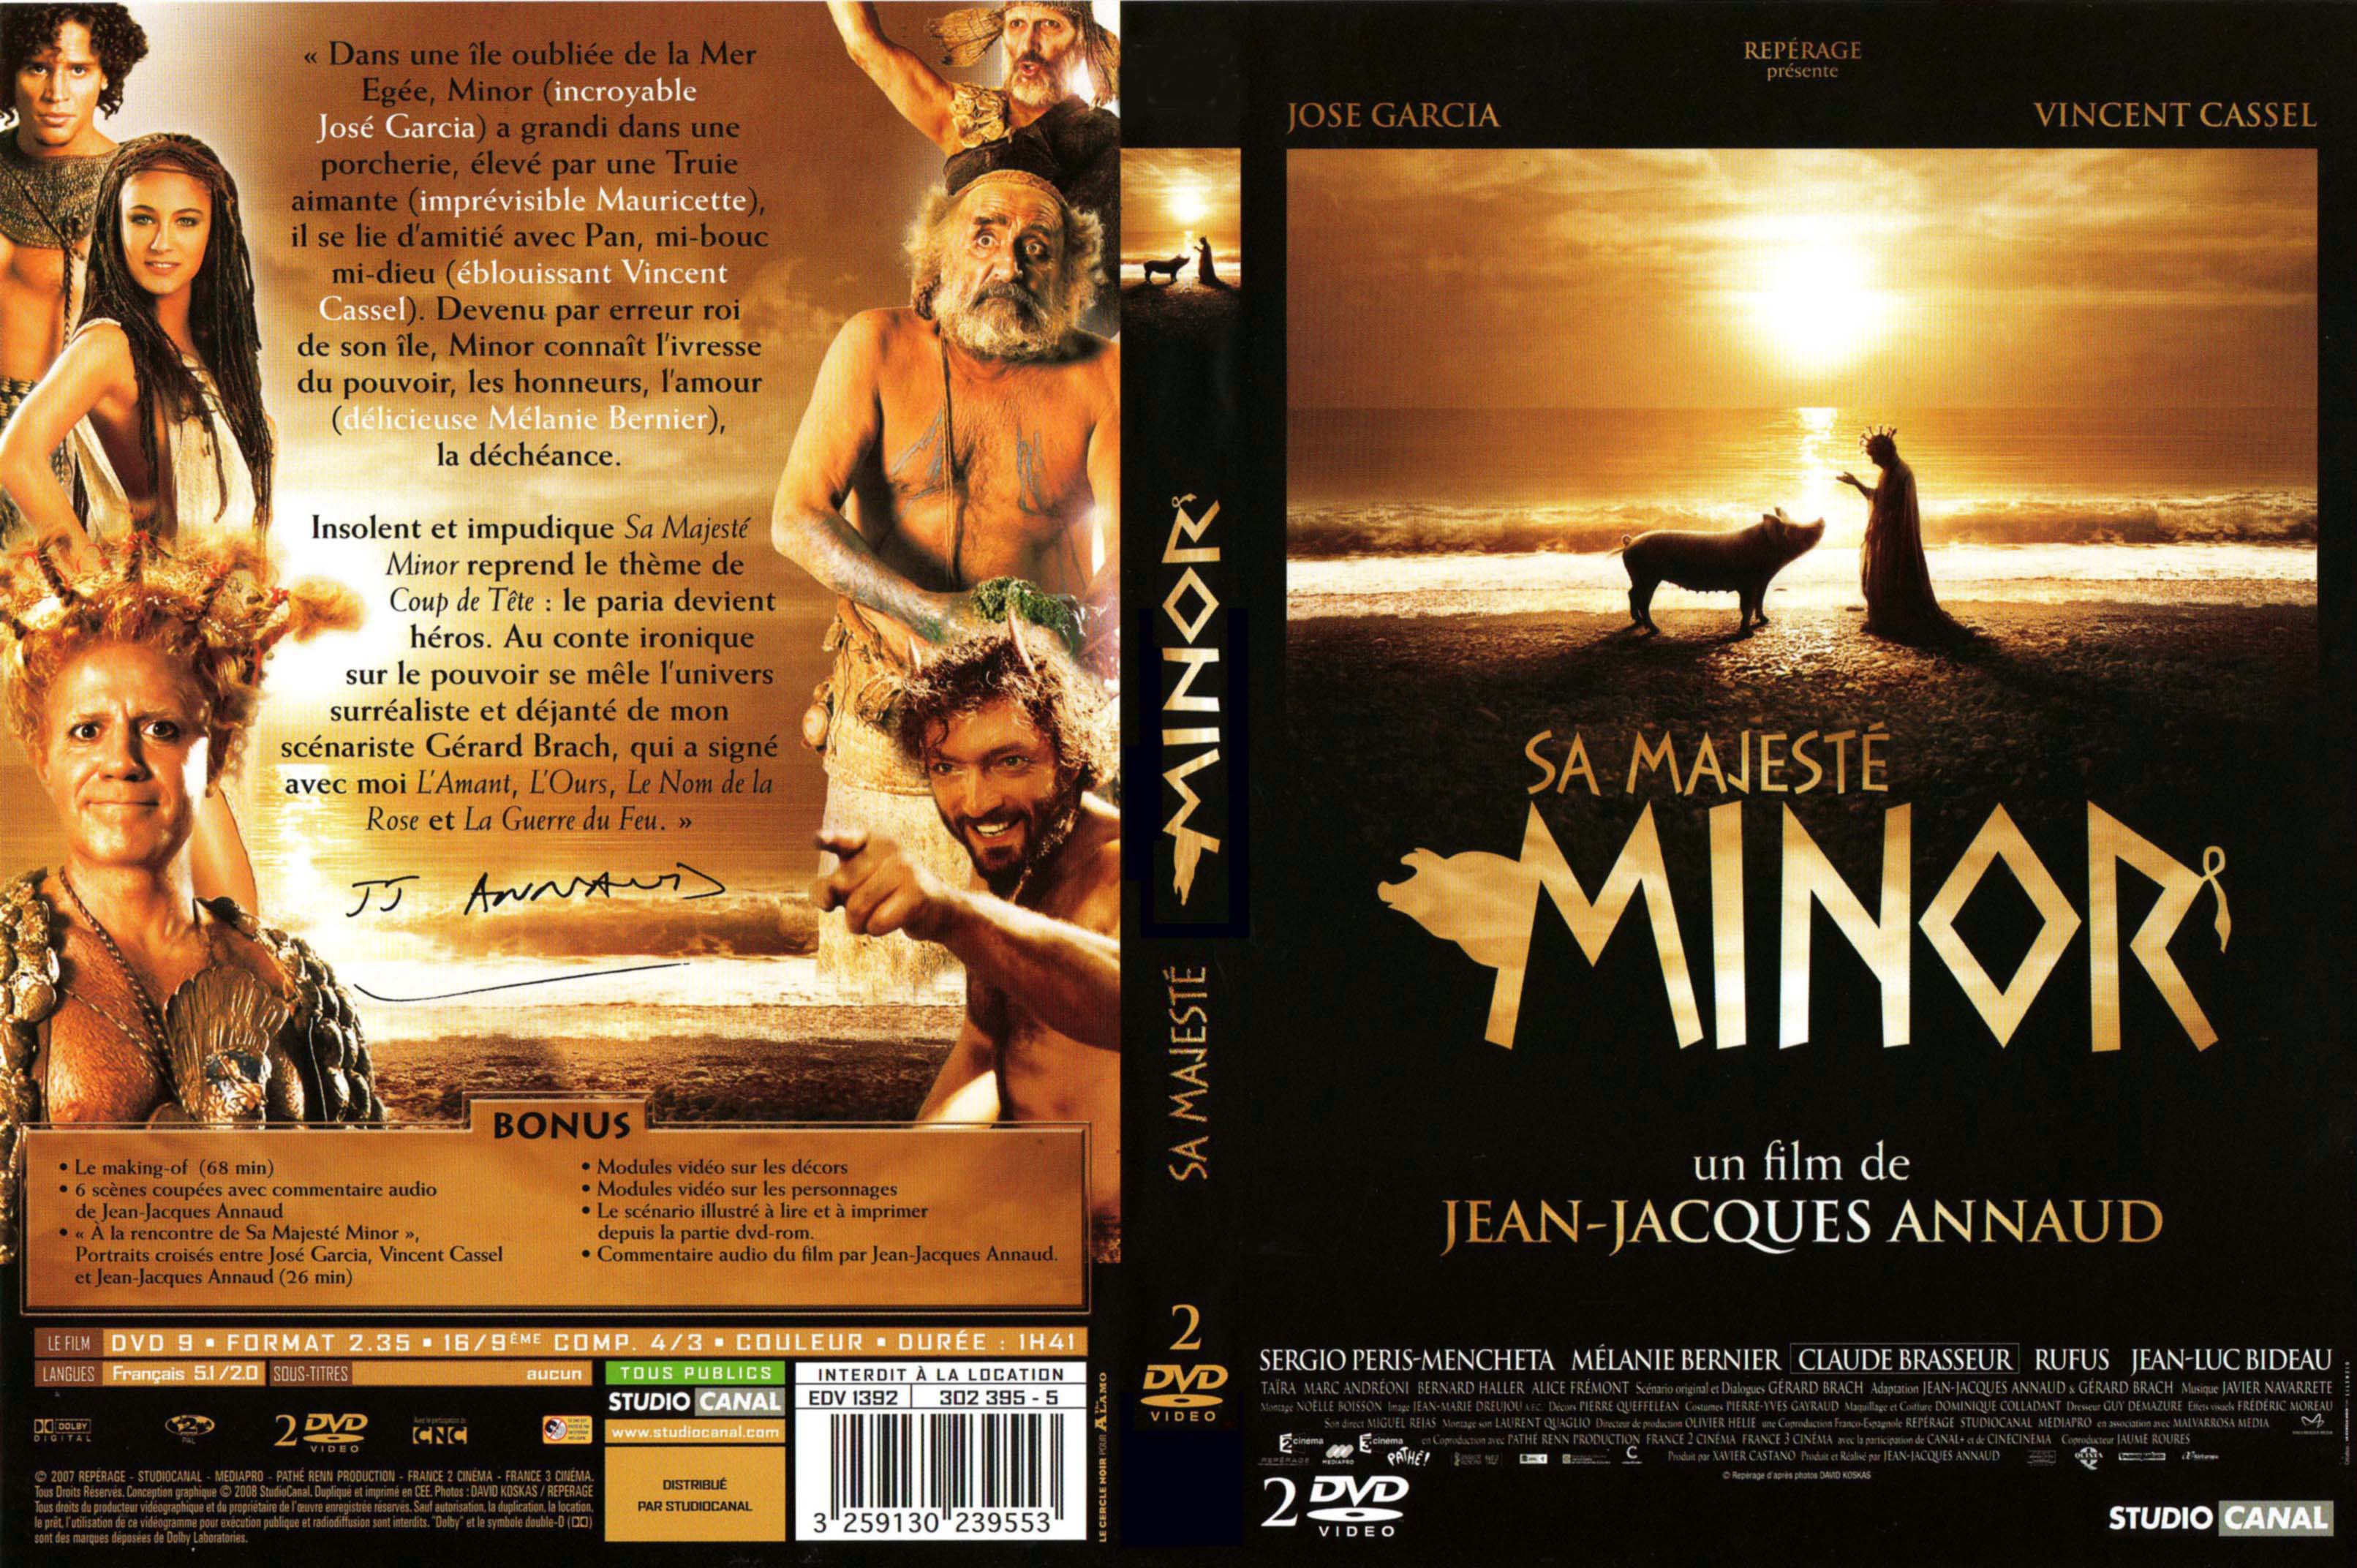 Jaquette DVD Sa majeste minor